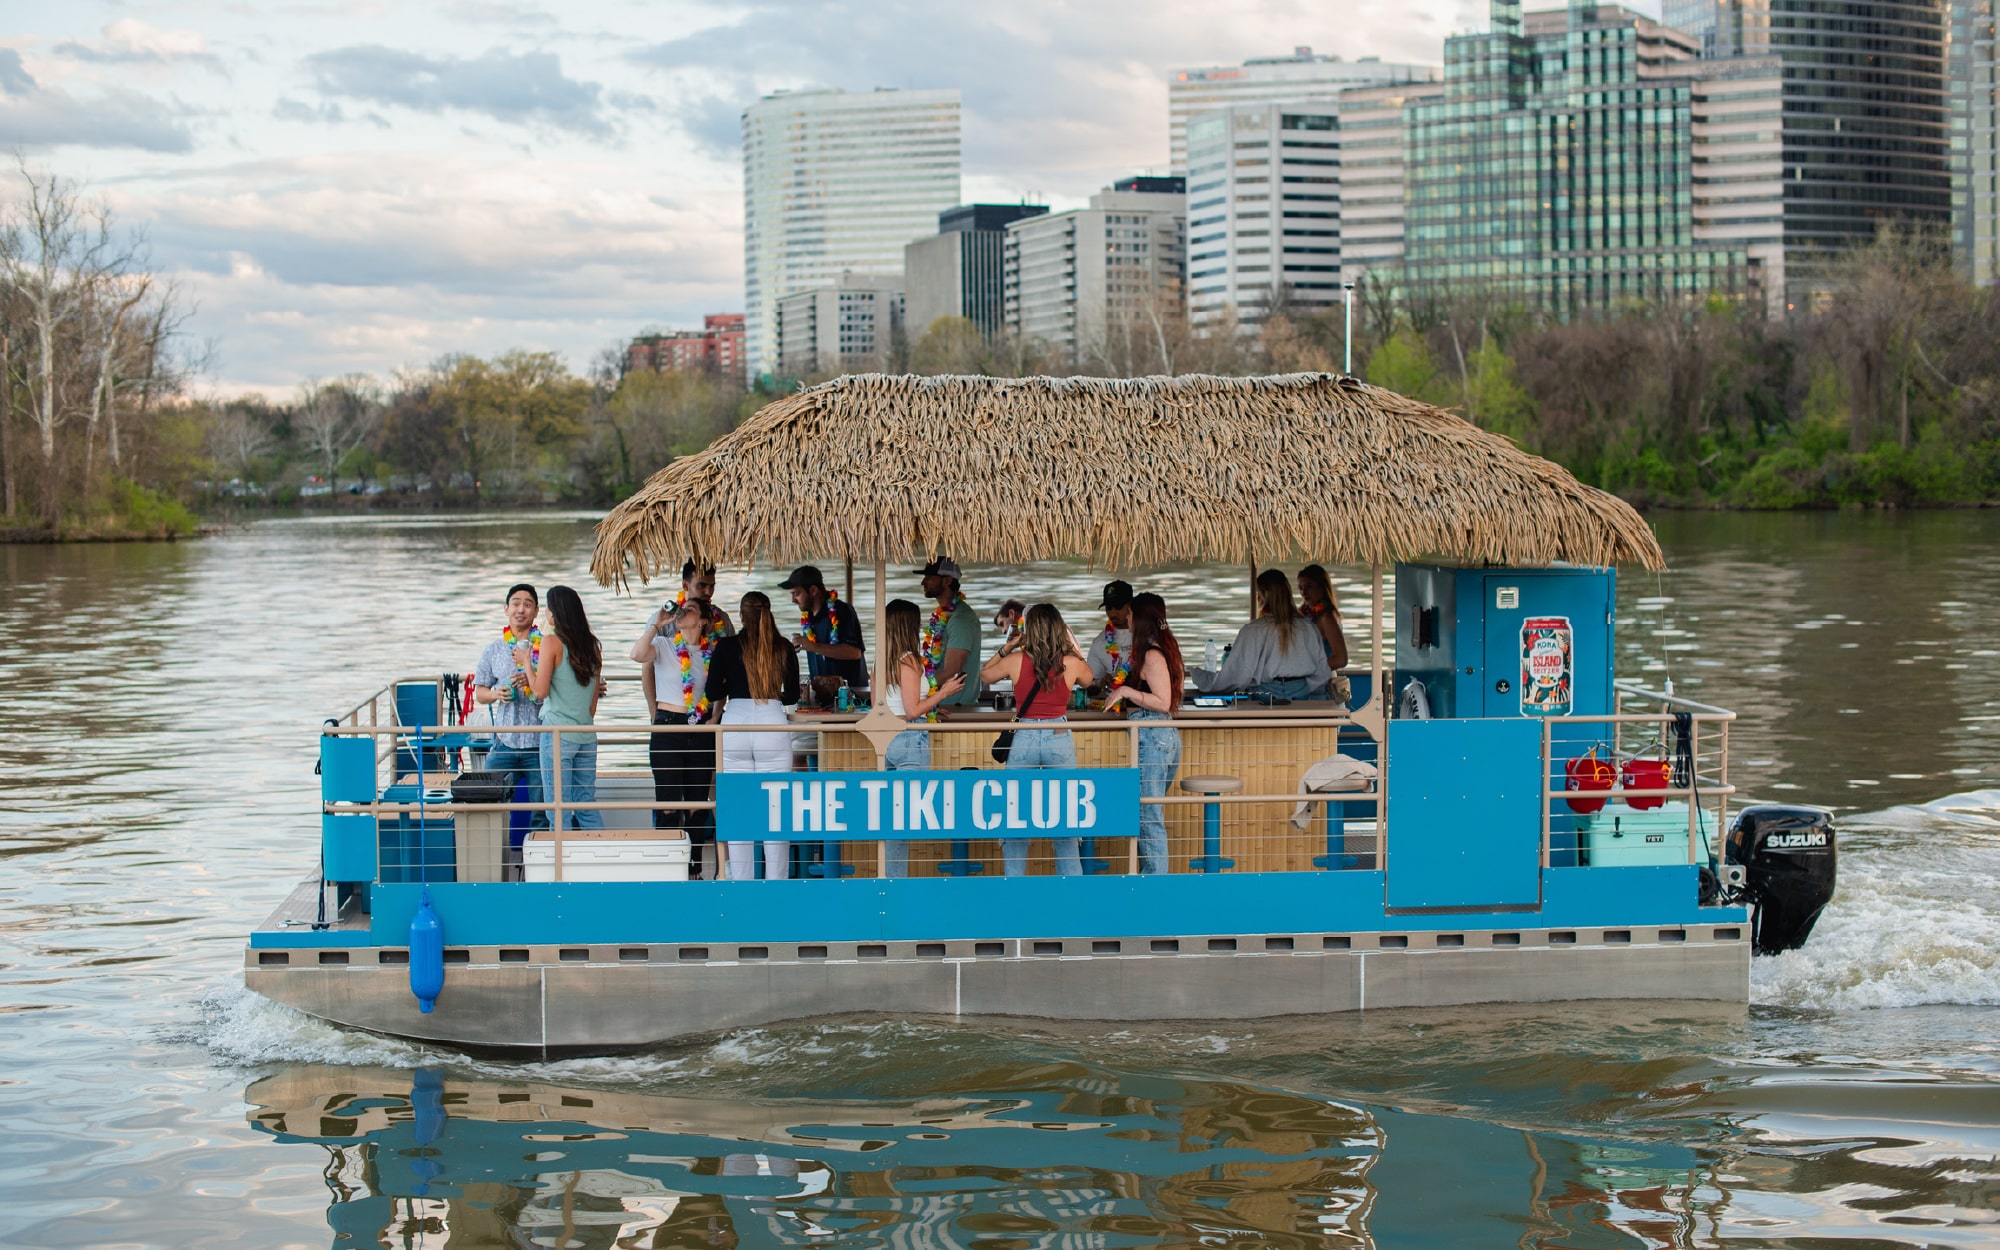 Tiki bar boat tour of Georgetown near Washington, DC. Potomac Tiki Club by Sea Suite Cruises.